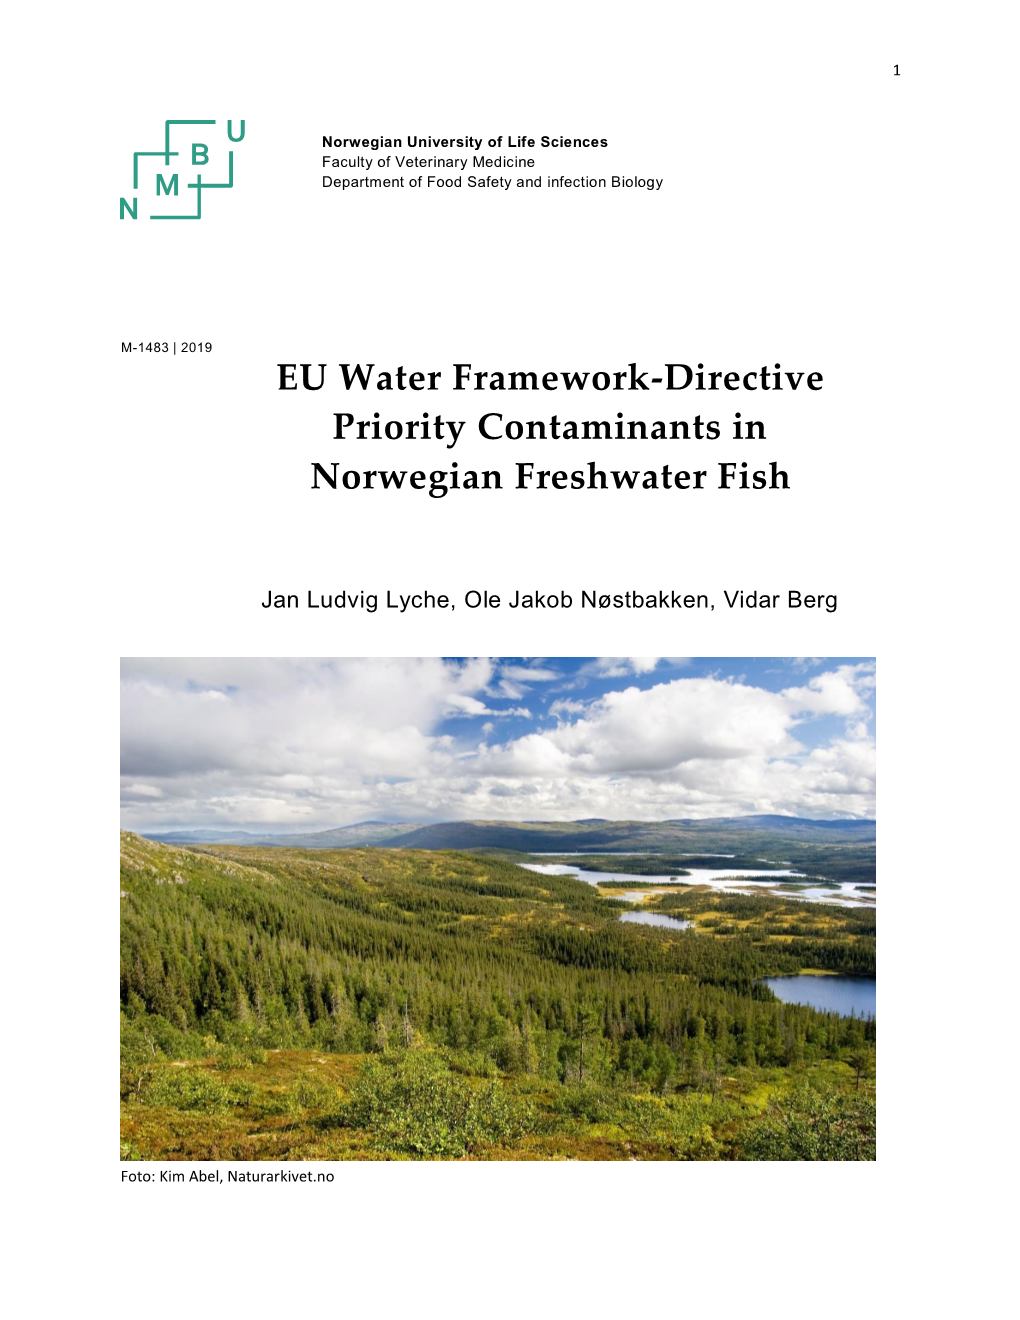 EU Water Framework-Directive Priority Contaminants in Norwegian Freshwater Fish